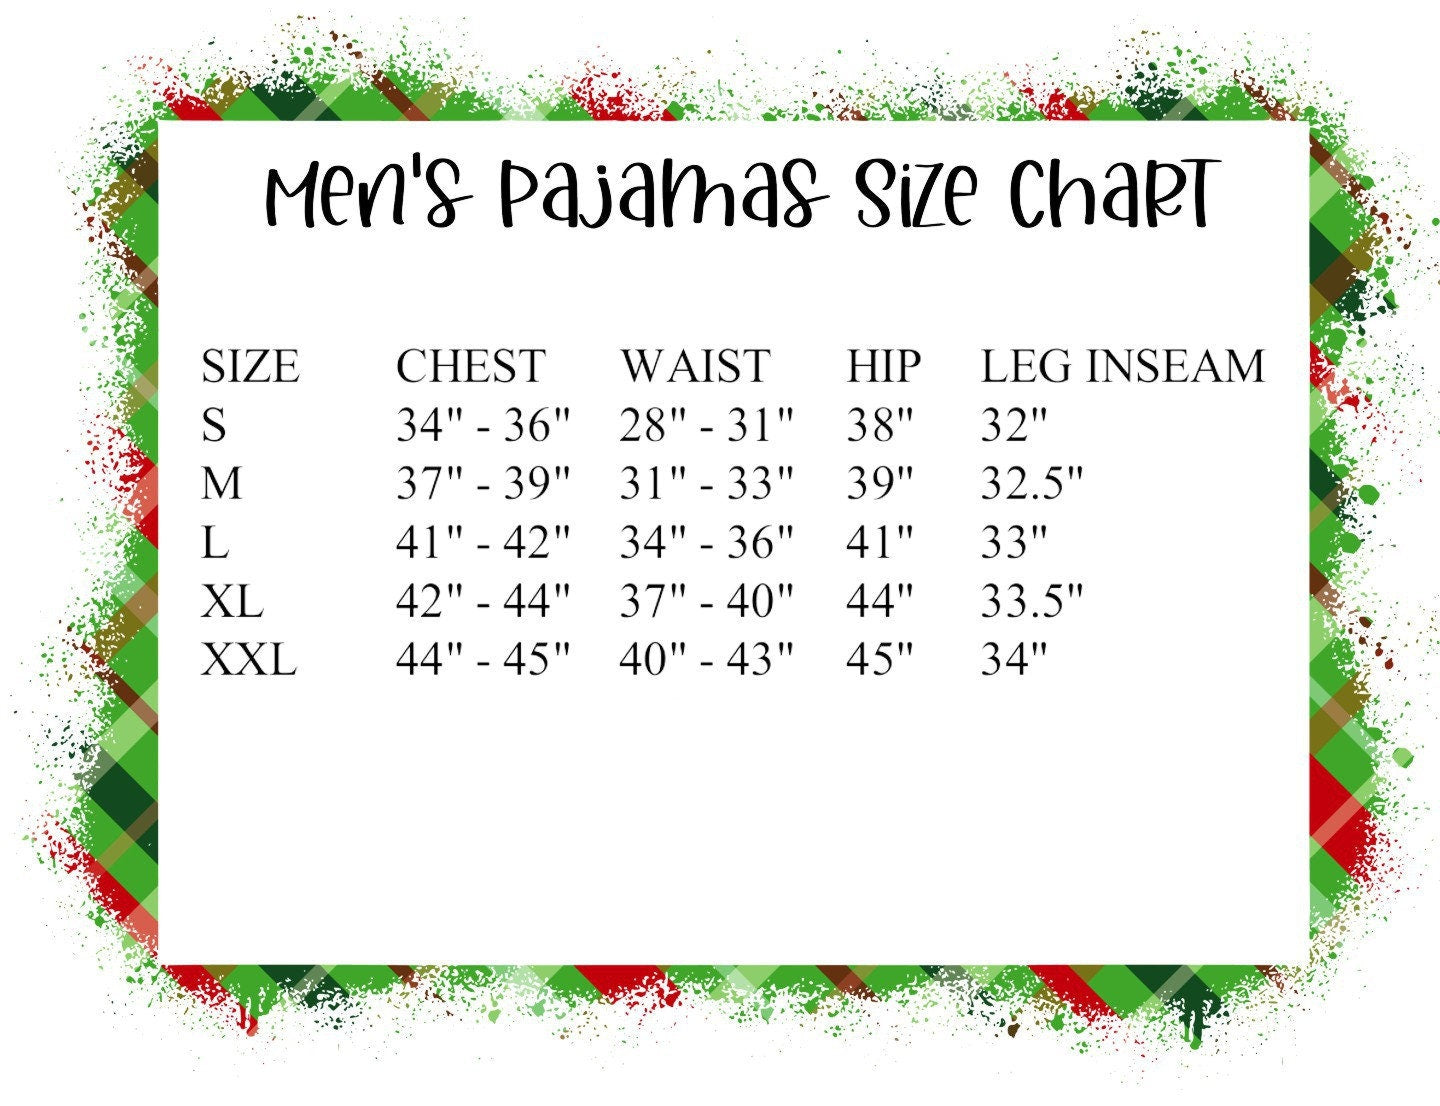 Personalized Penguin Family Christmas Pajamas - matching christmas pjs -  women's christmas jammies - matching family christmas pajamas